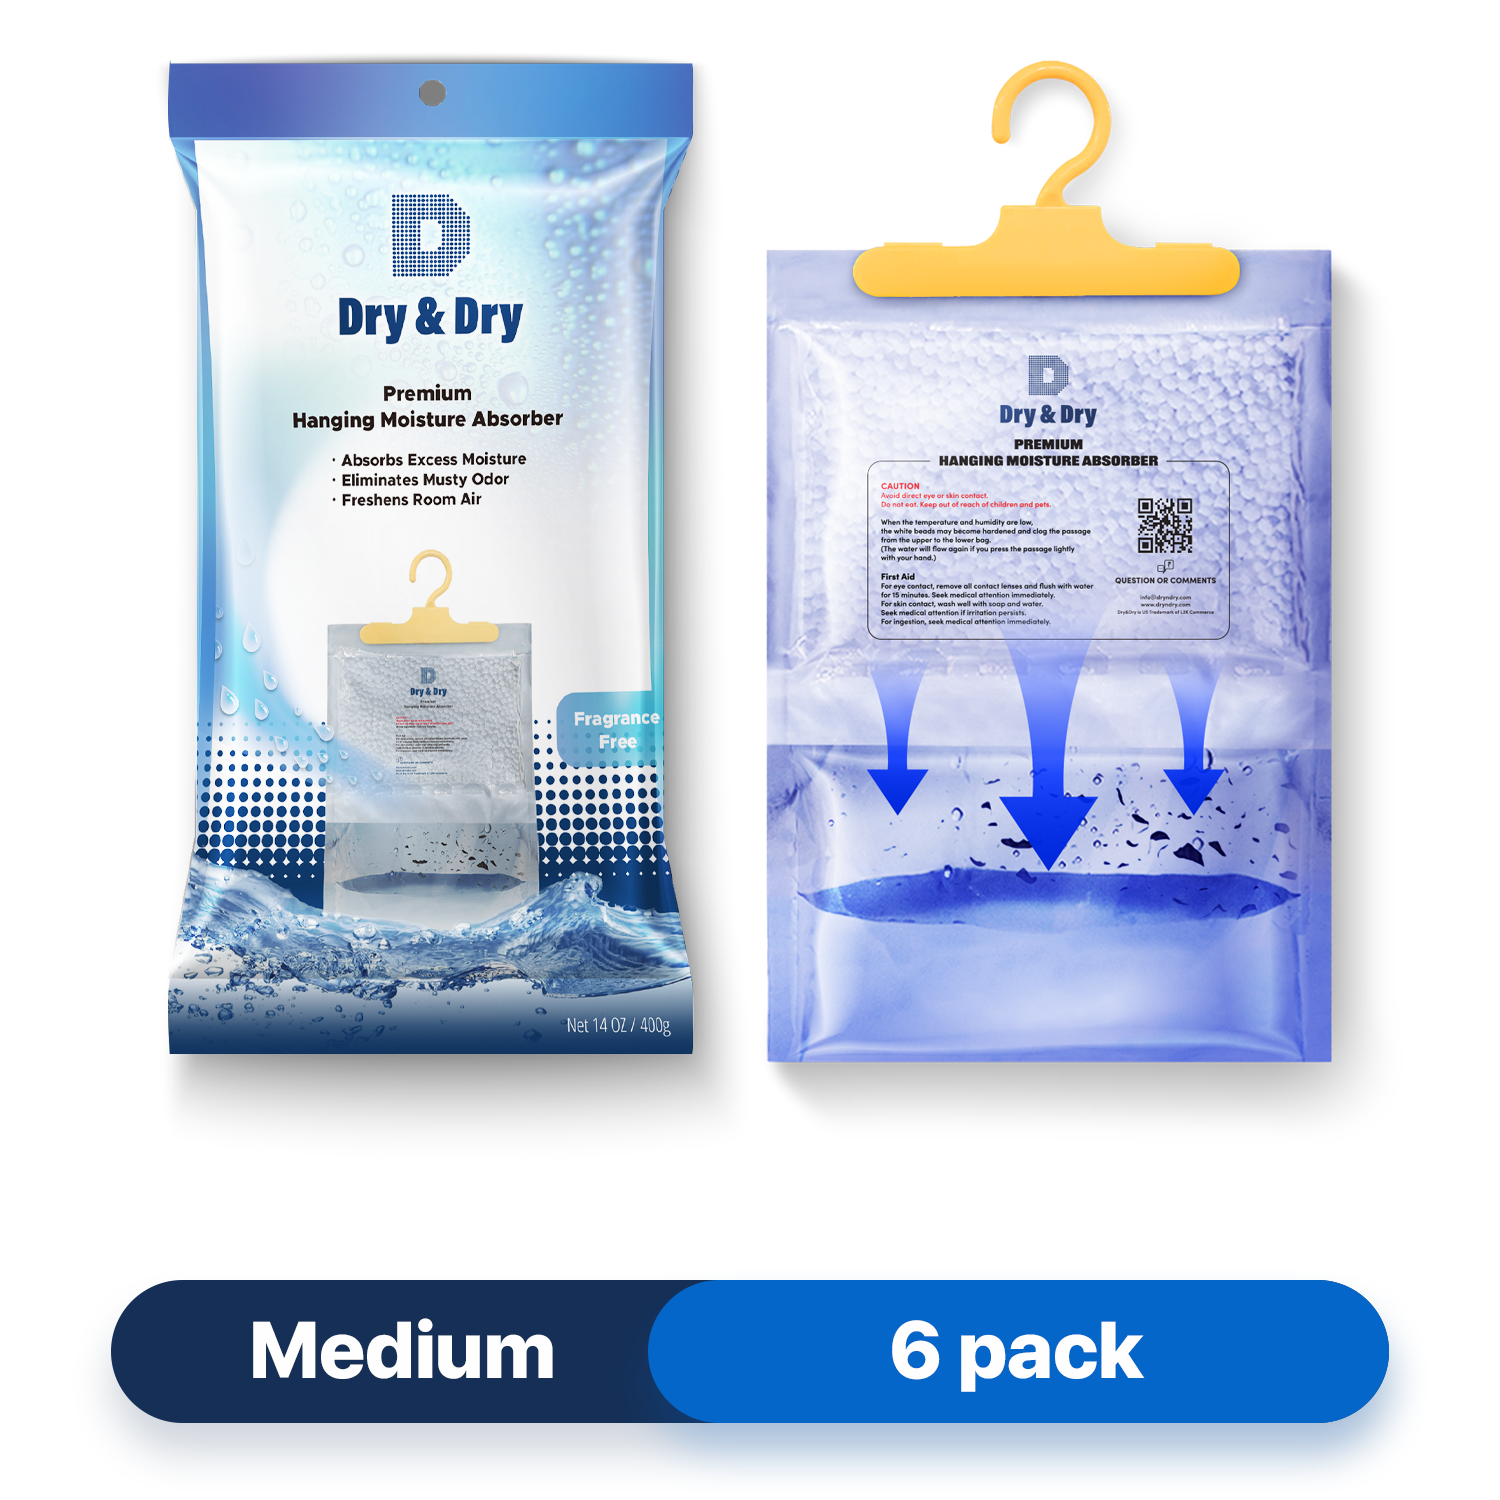 6 pack] [Net 7 oz/Pack] “Dry & Dry” Premium Hanging Moisture Absorber